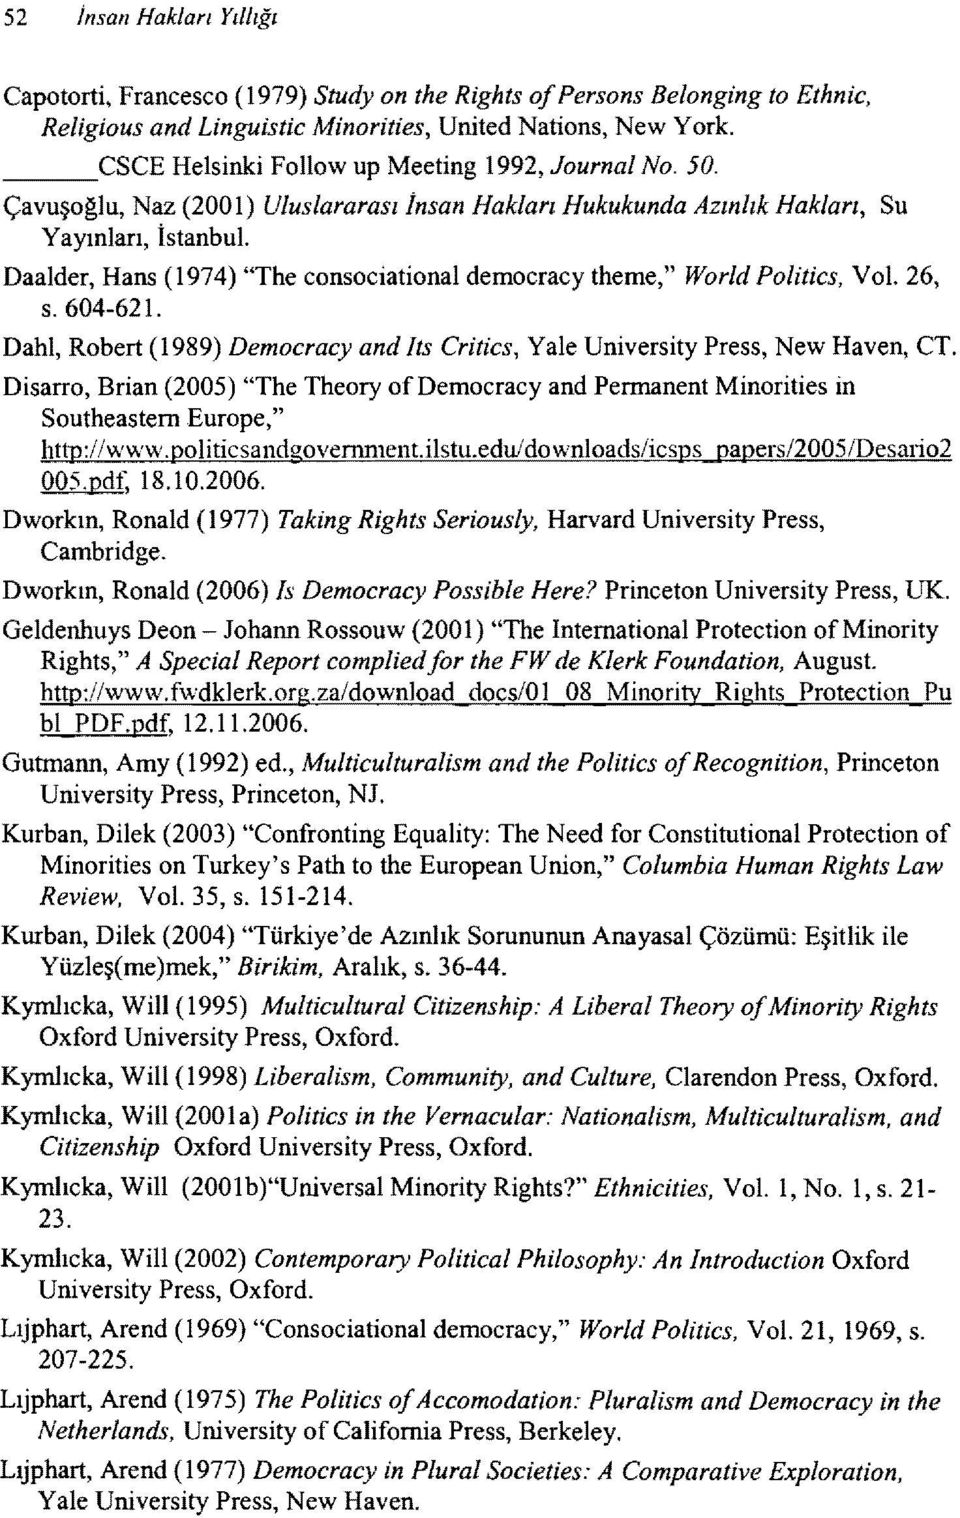 DaaIder, Hans (1974) "The consociational democracy therne," World Politics, VoL. 26, s.604-621. DahI, Robert (1989) Democracy and Its Critics, Yale University Press, New Haven, CT.